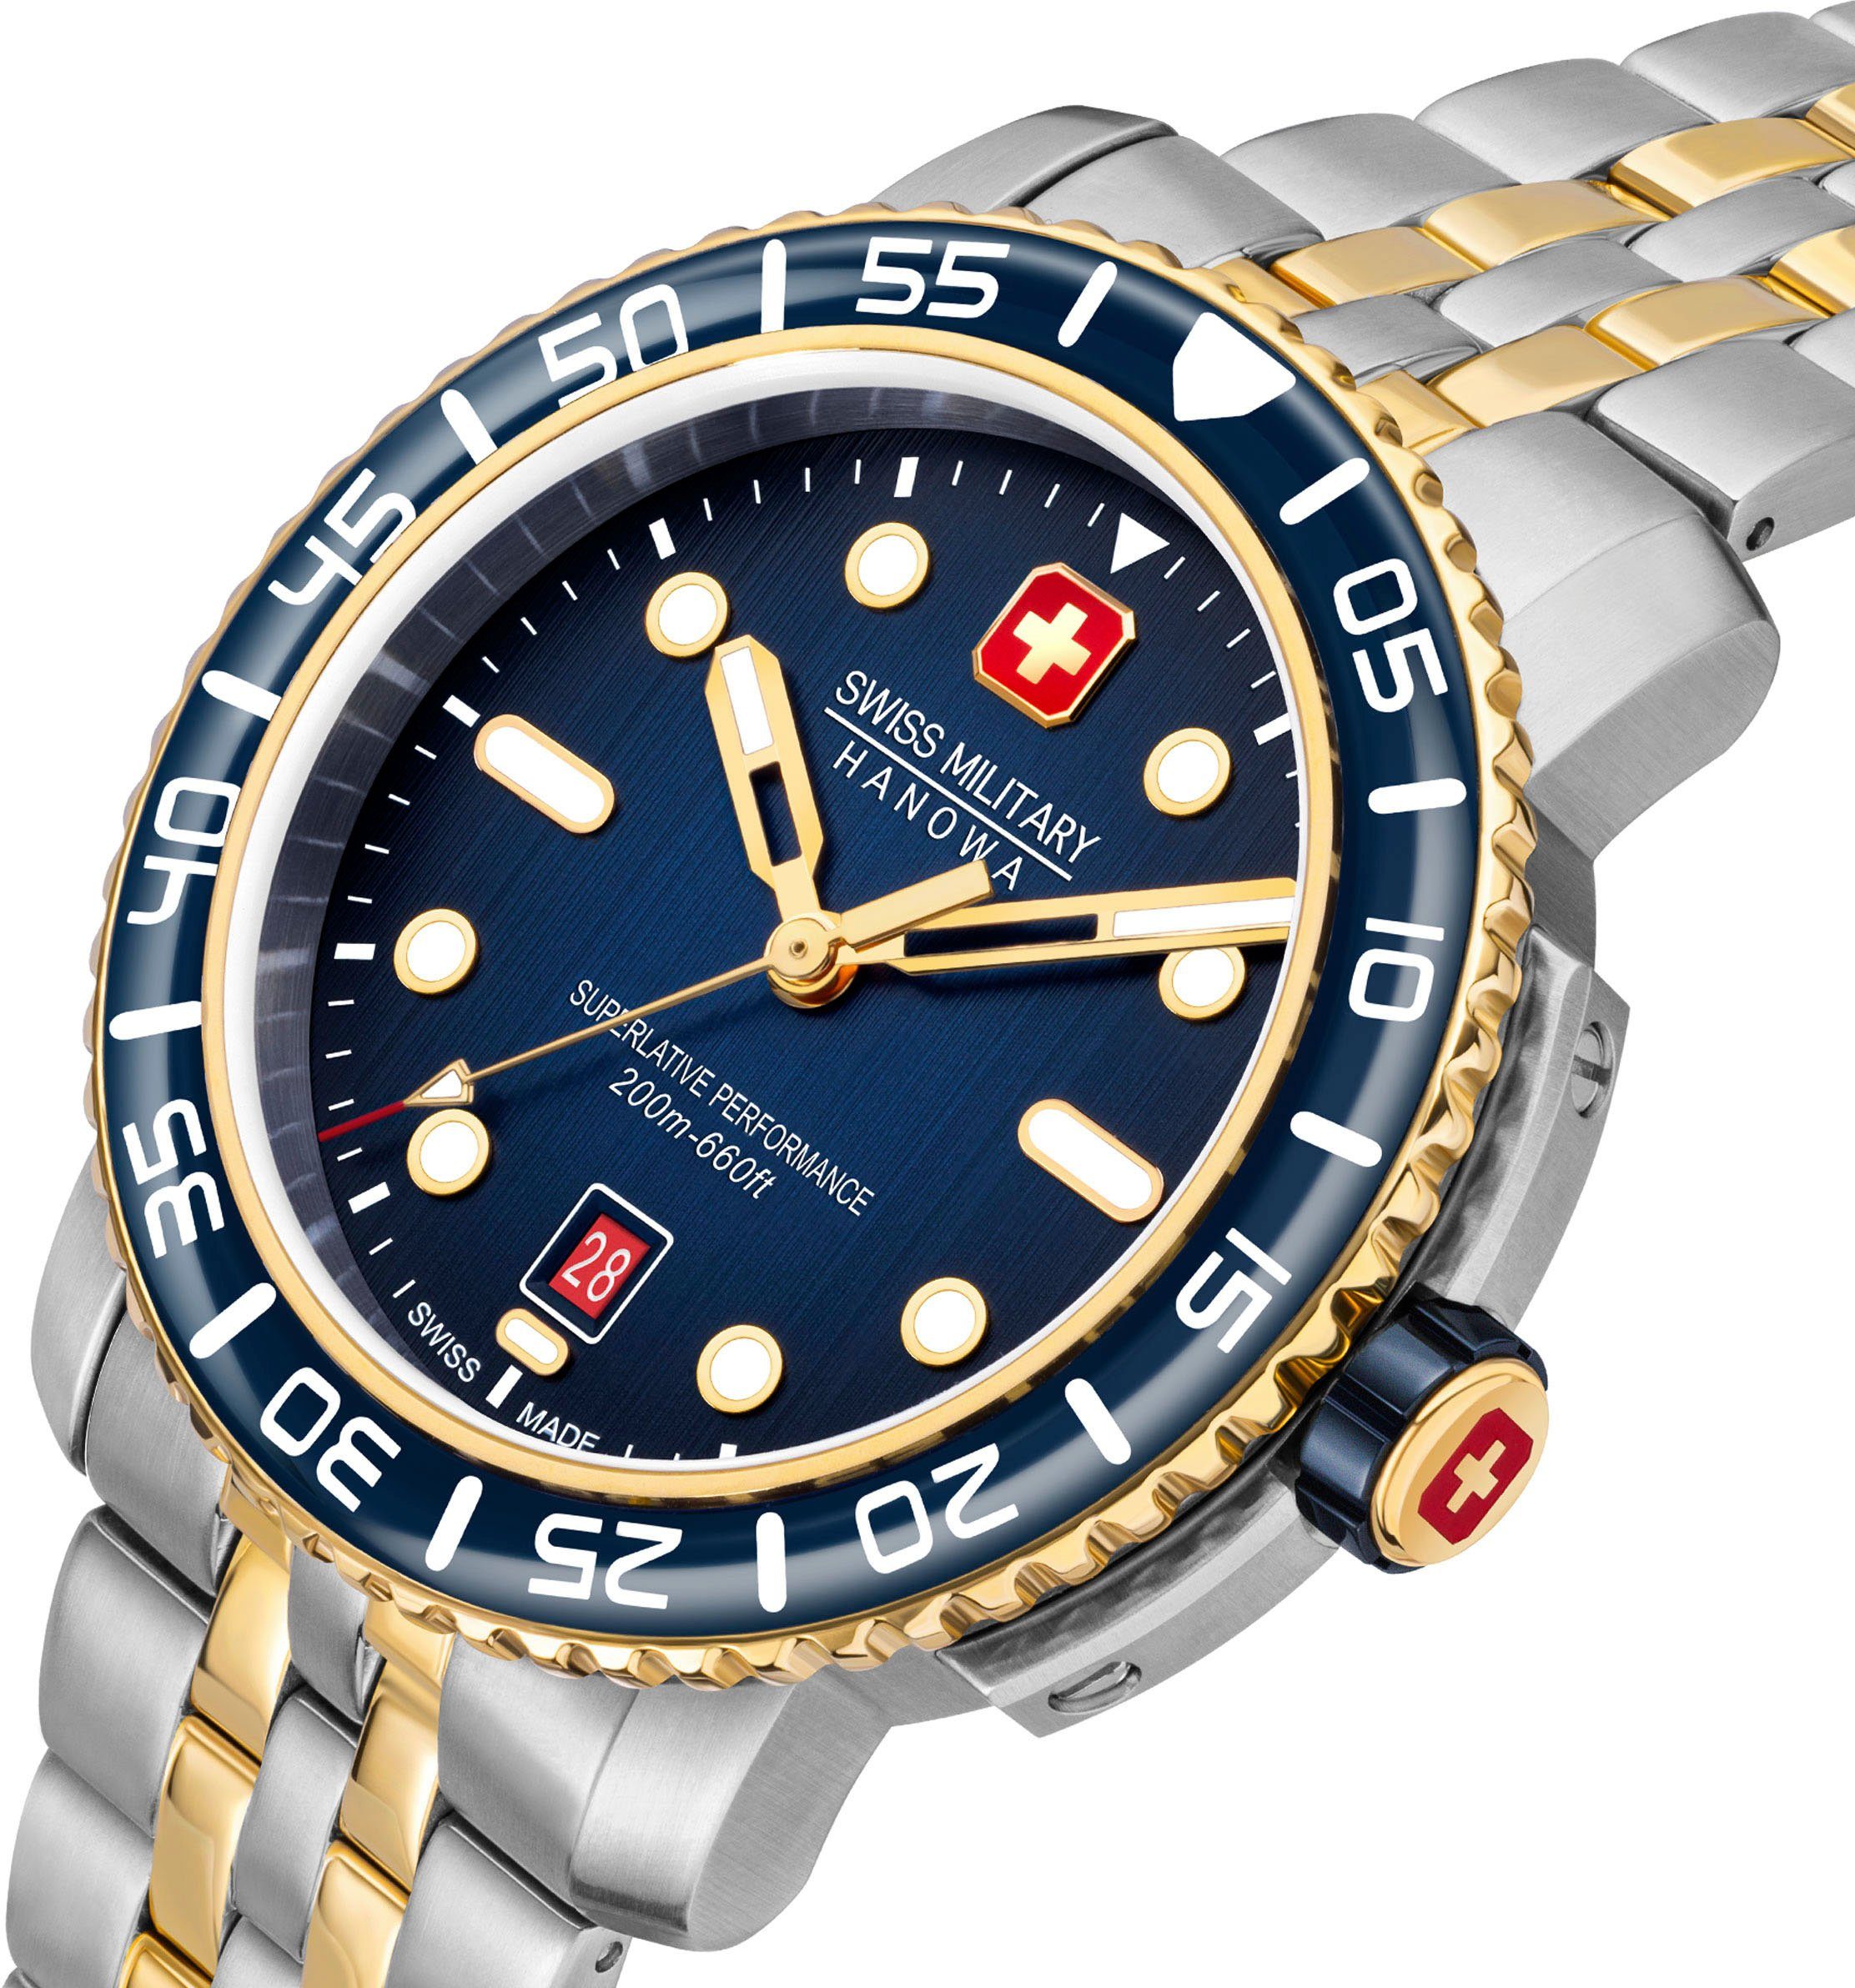 Swiss Military Hanowa Schweizer Uhr Blau MARLIN, BLACK SMWGH0001760